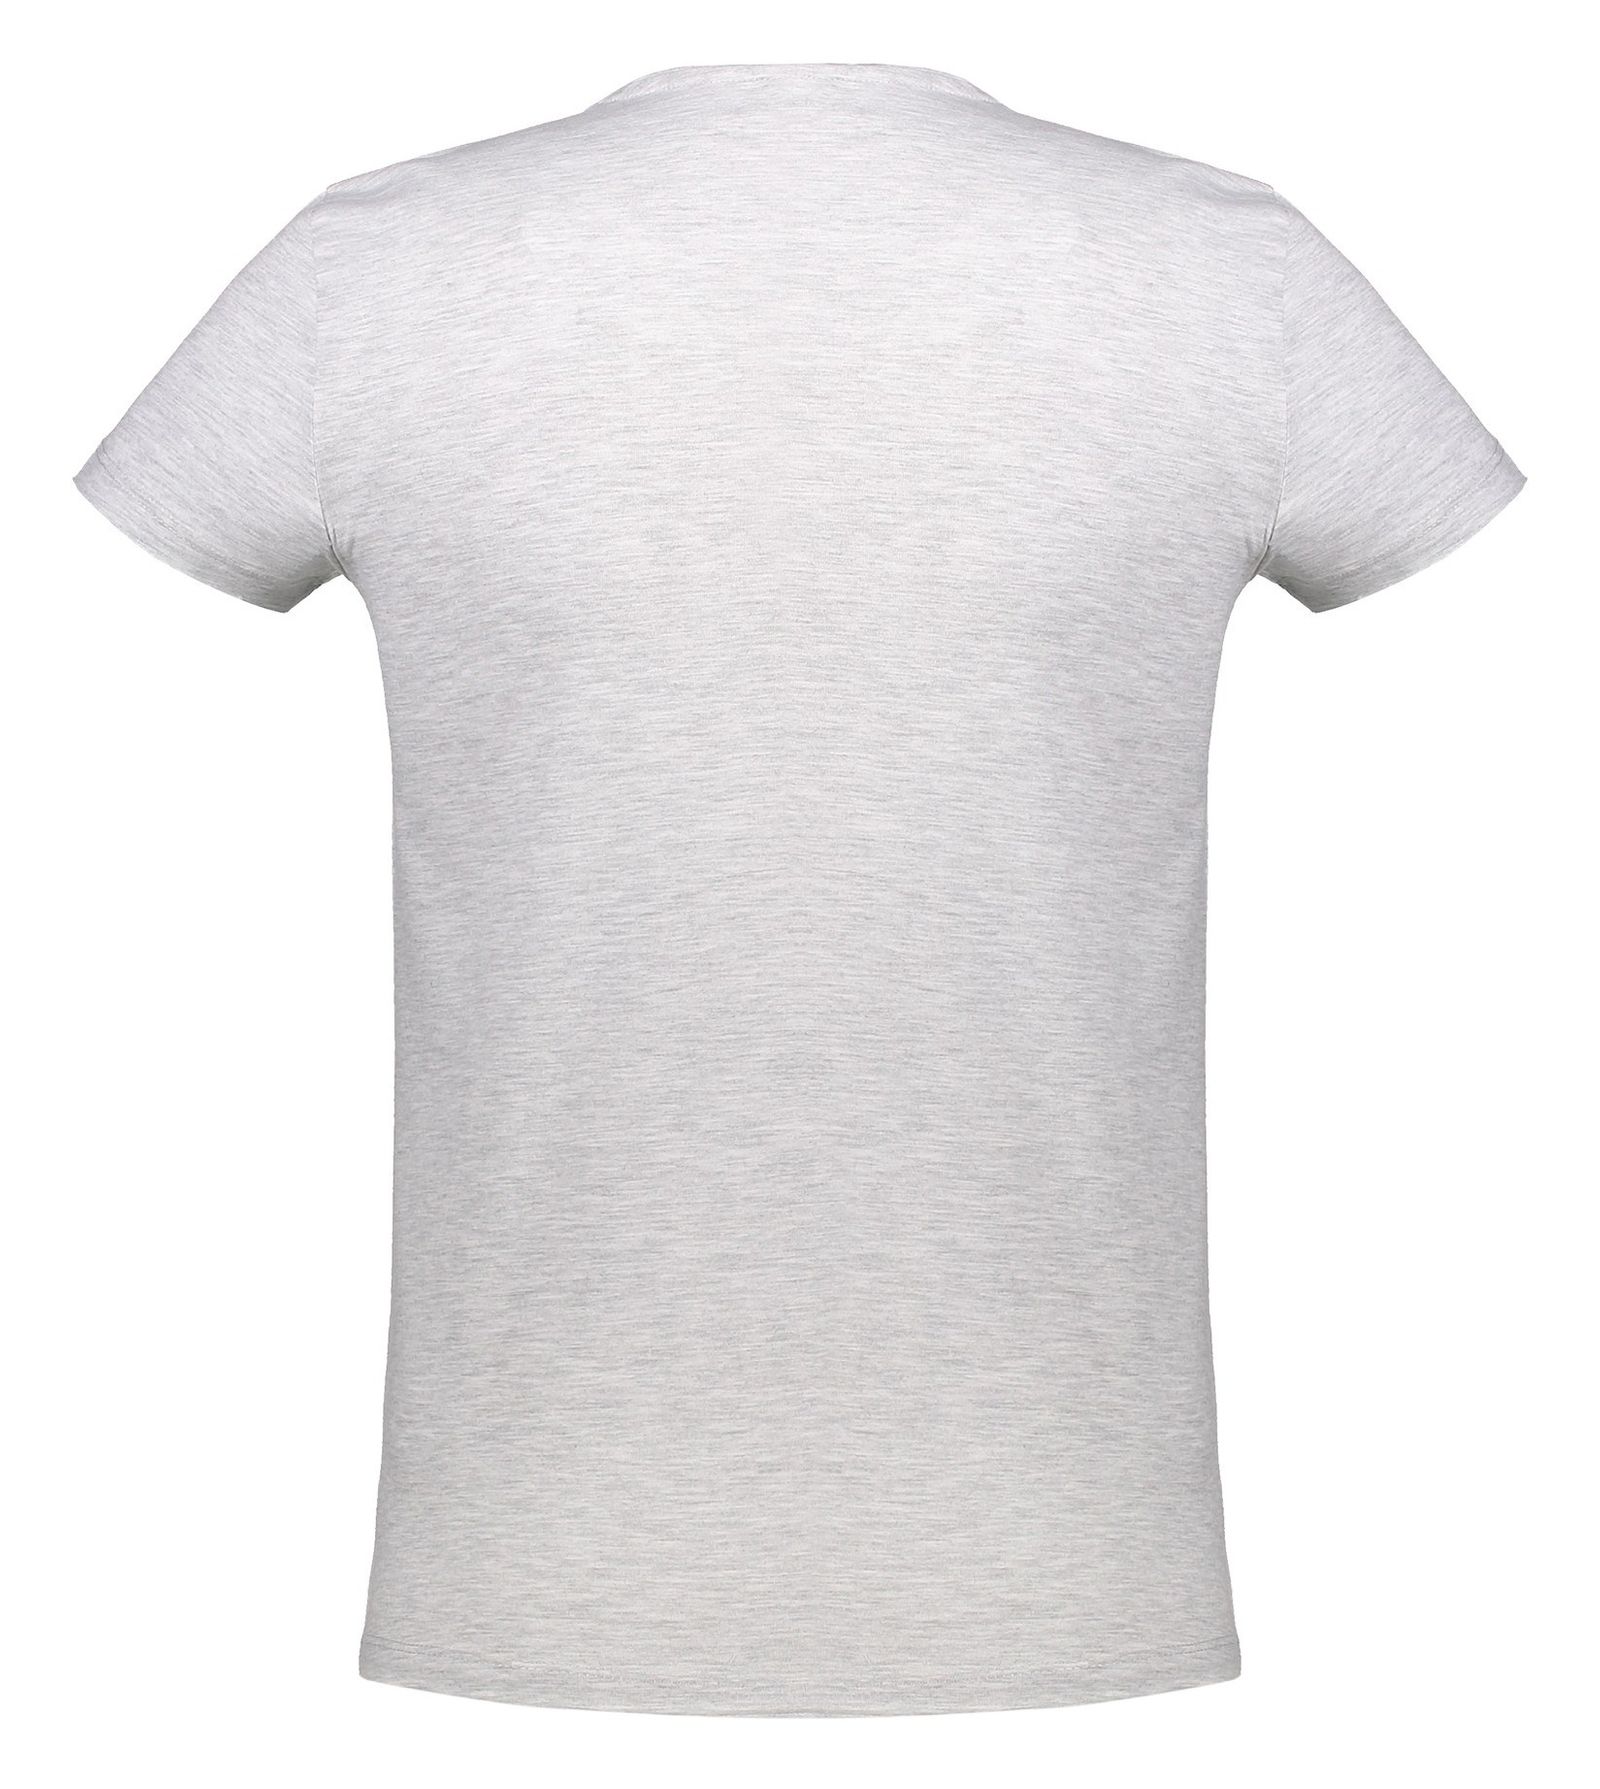 تی شرت یقه گرد مردانه - دفکتو - طوسي ملانژ روشن - 5